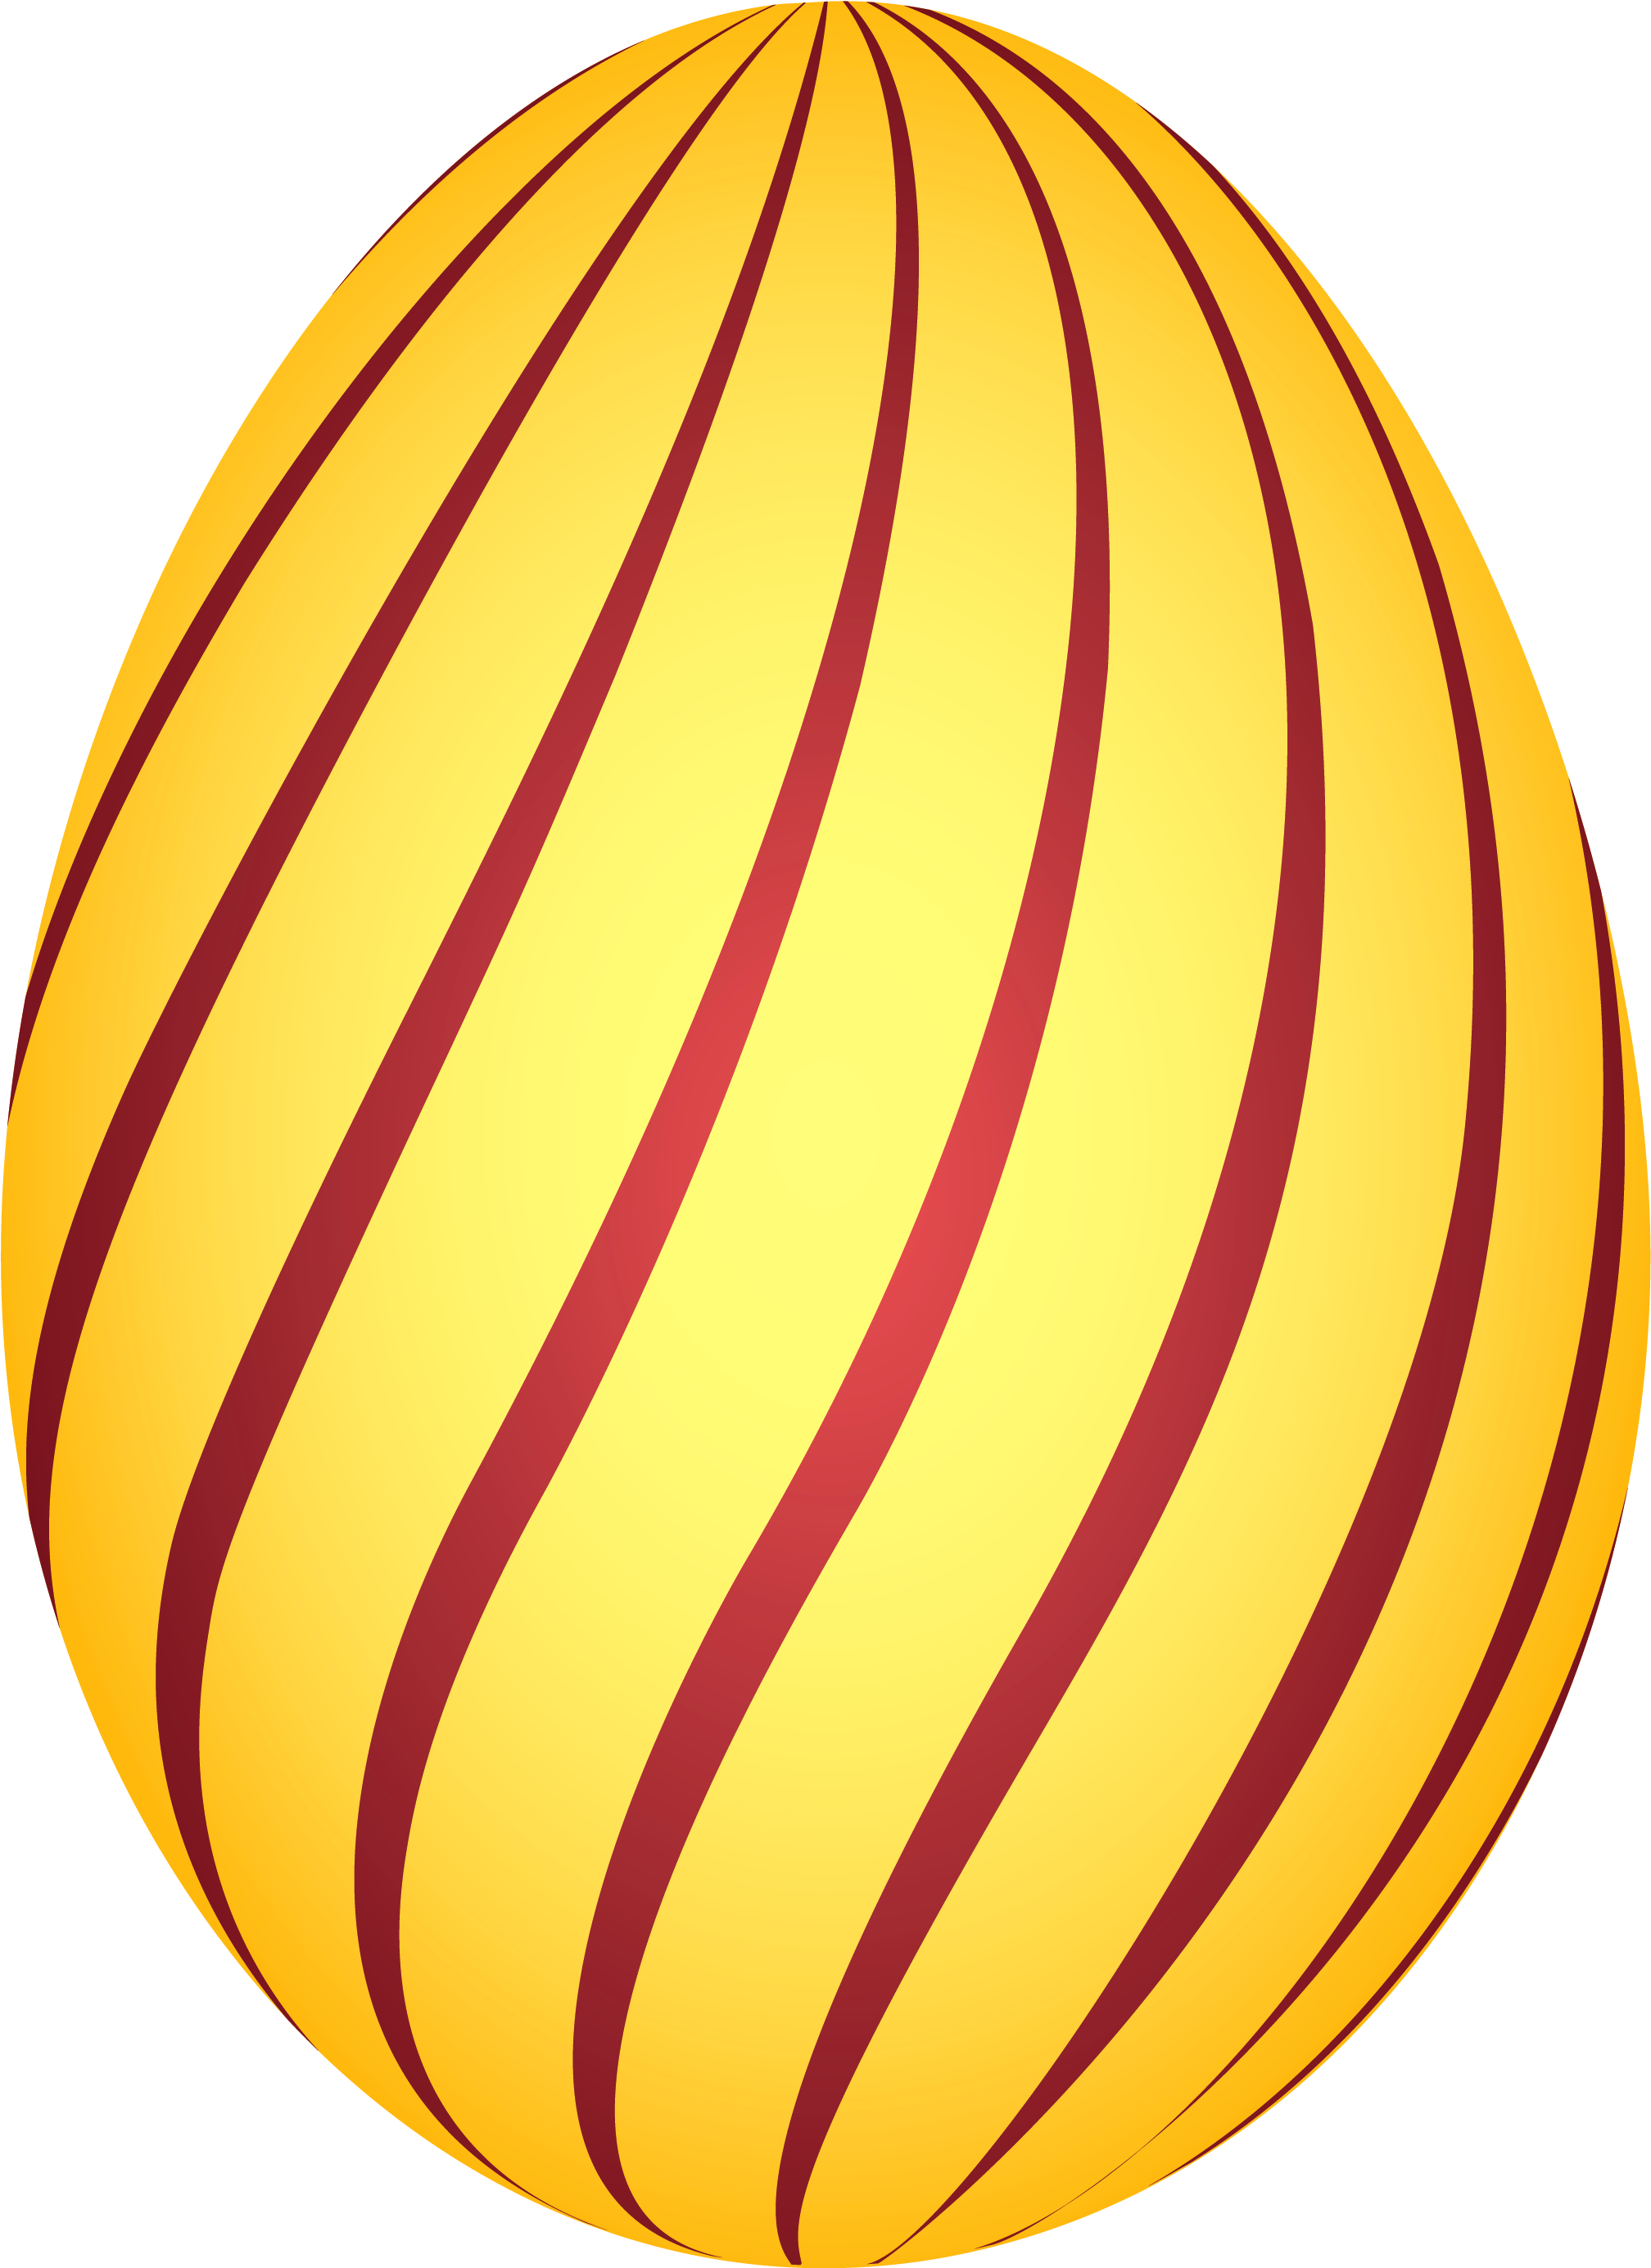 Easter eggs hd png. Egg clipart orange